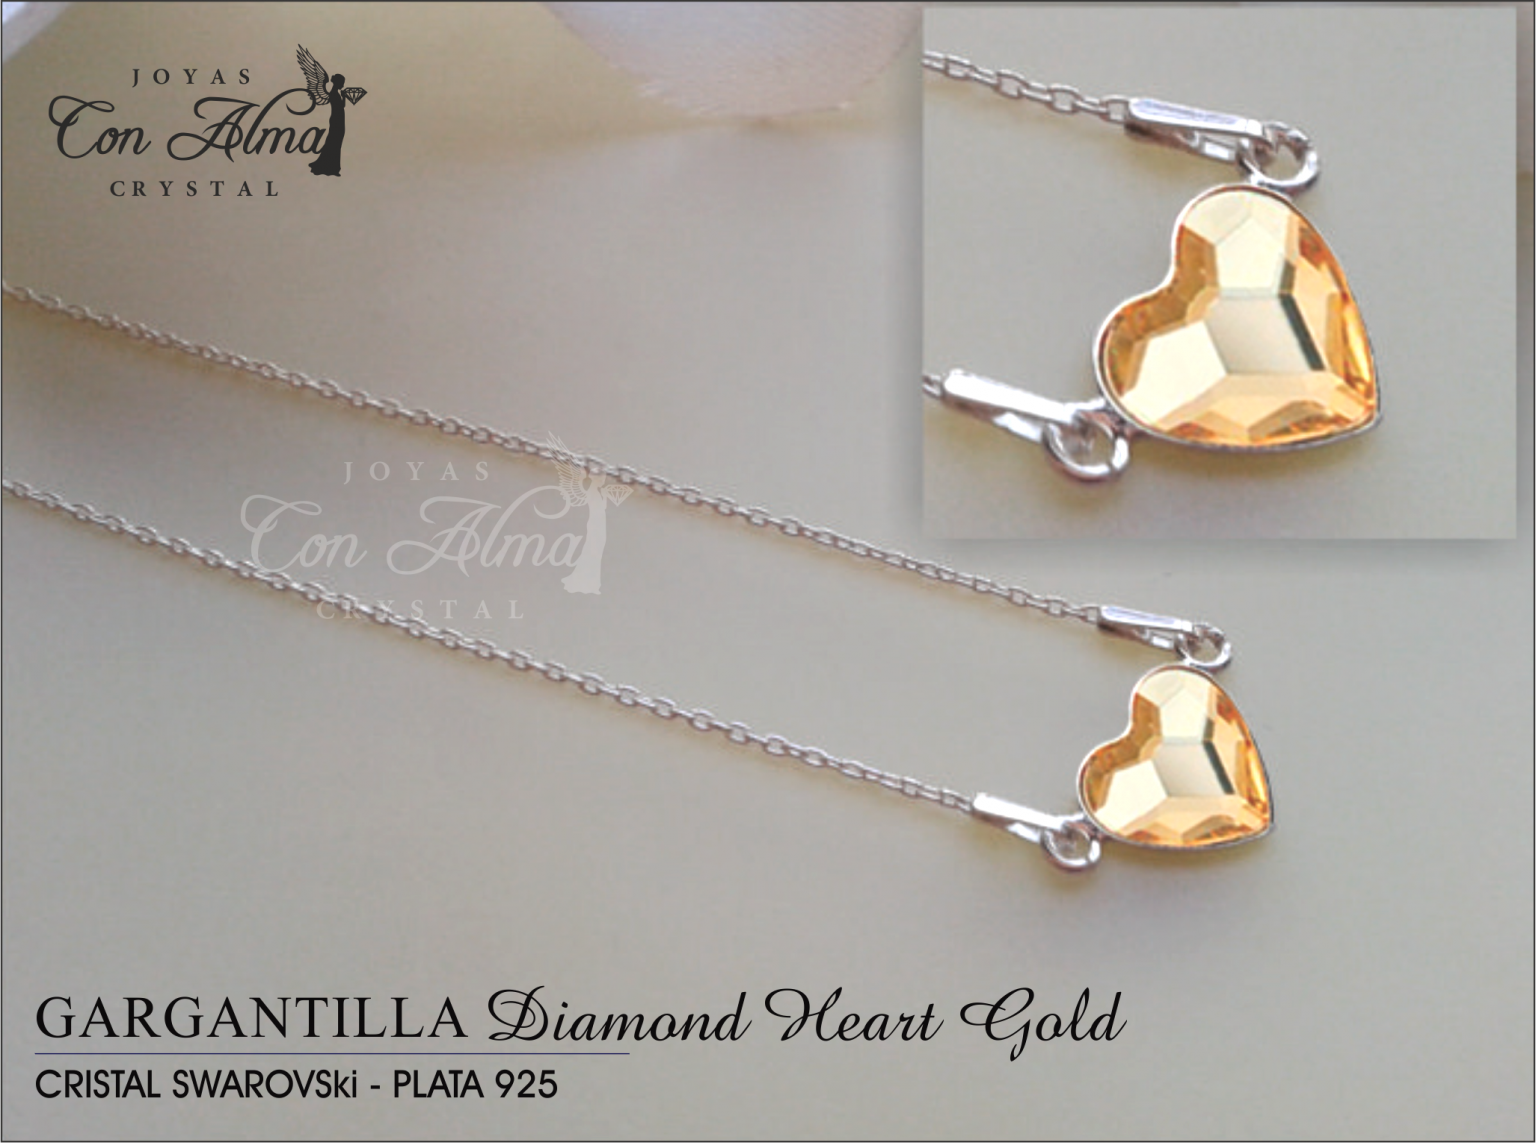 Gargantilla Diamond Gold 
34,99 €